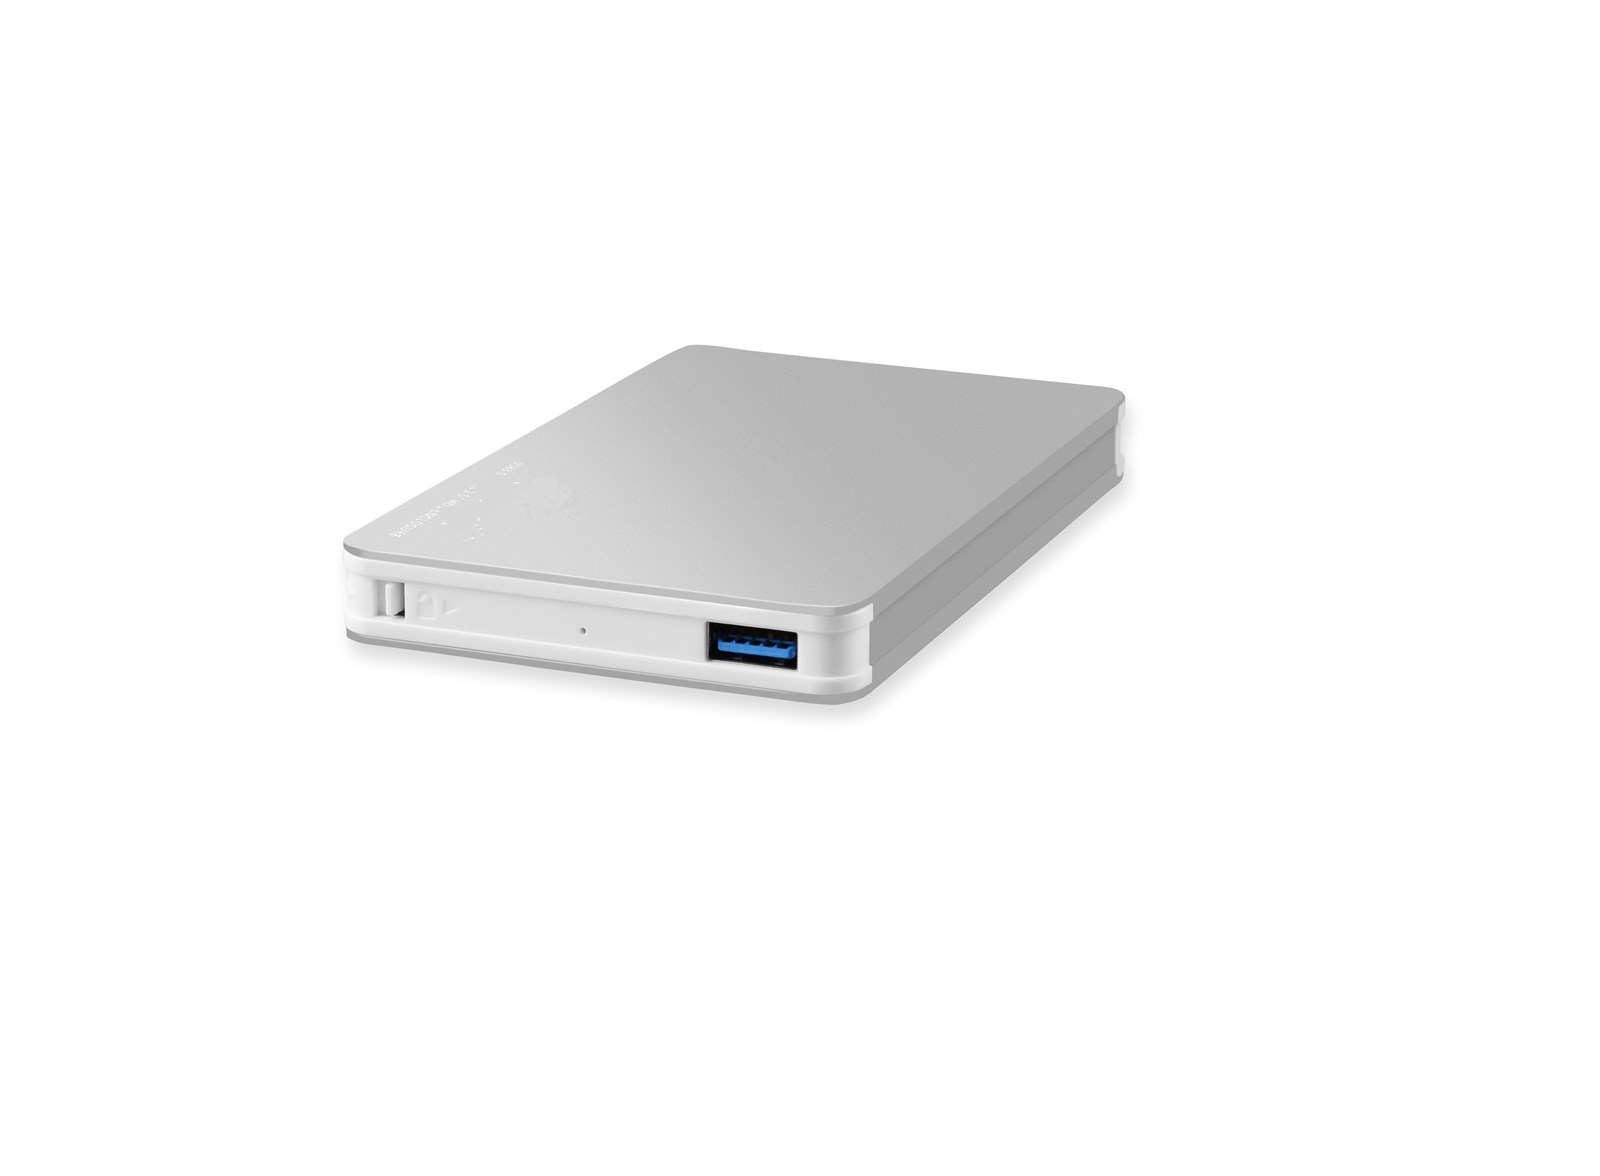 Succmax 25 Inch USB 30 SATA3 External HDD Enclosure